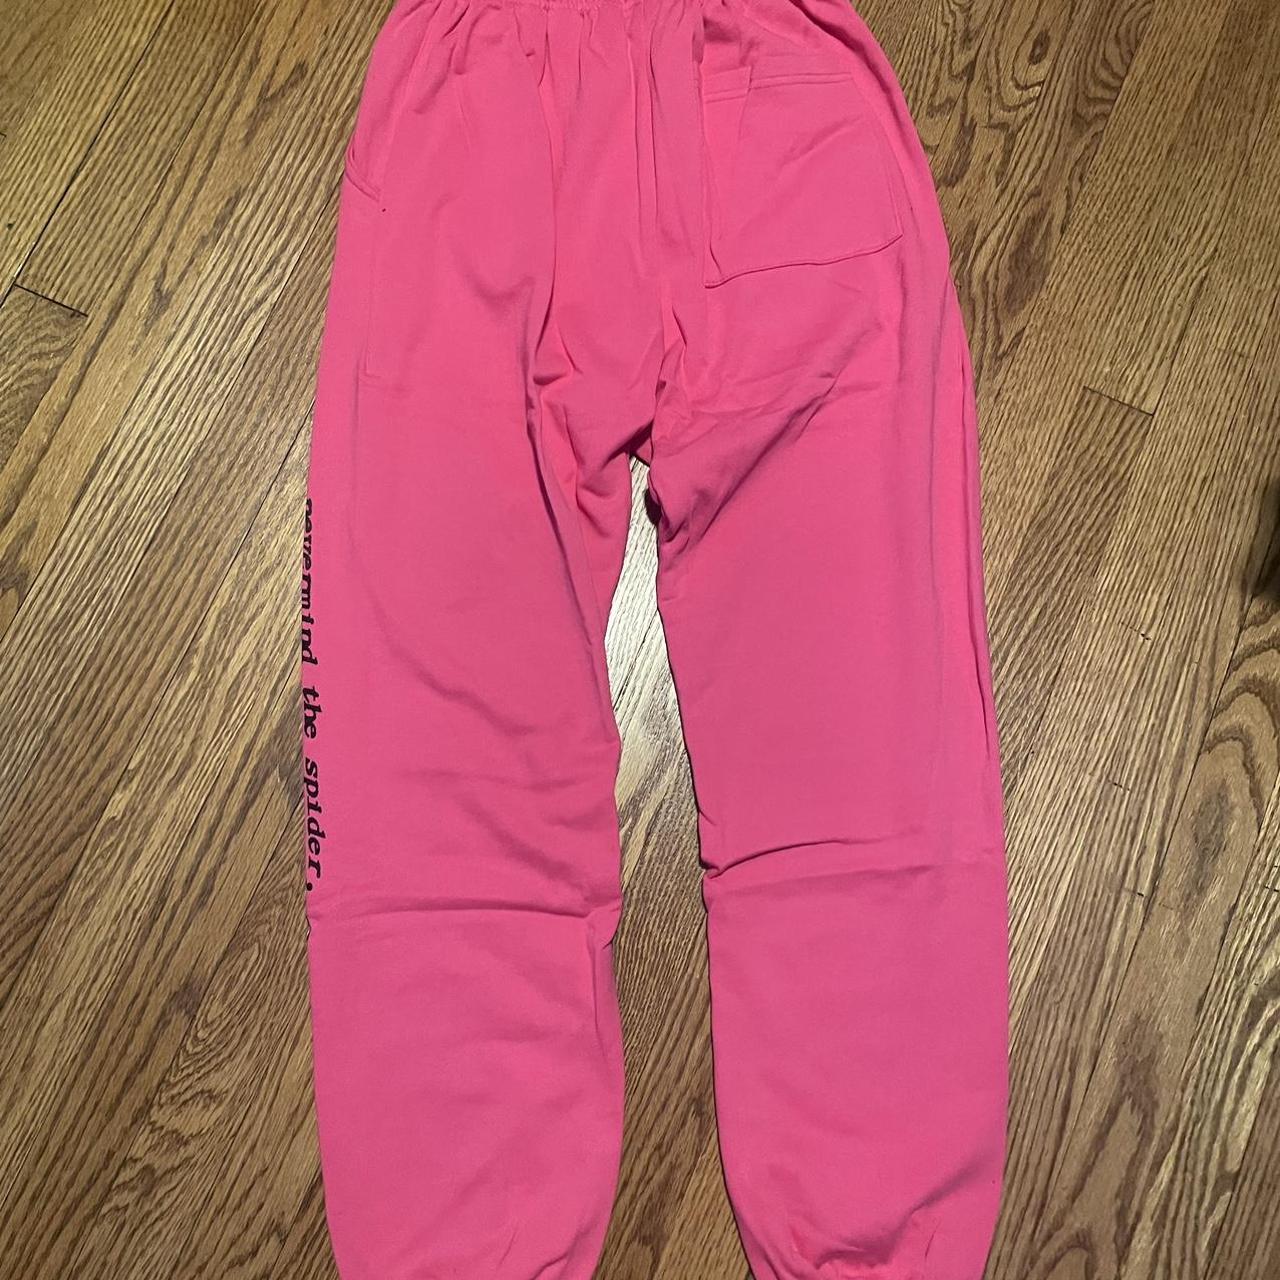 Sp5der “pink” pink sweatpants sz M - Depop